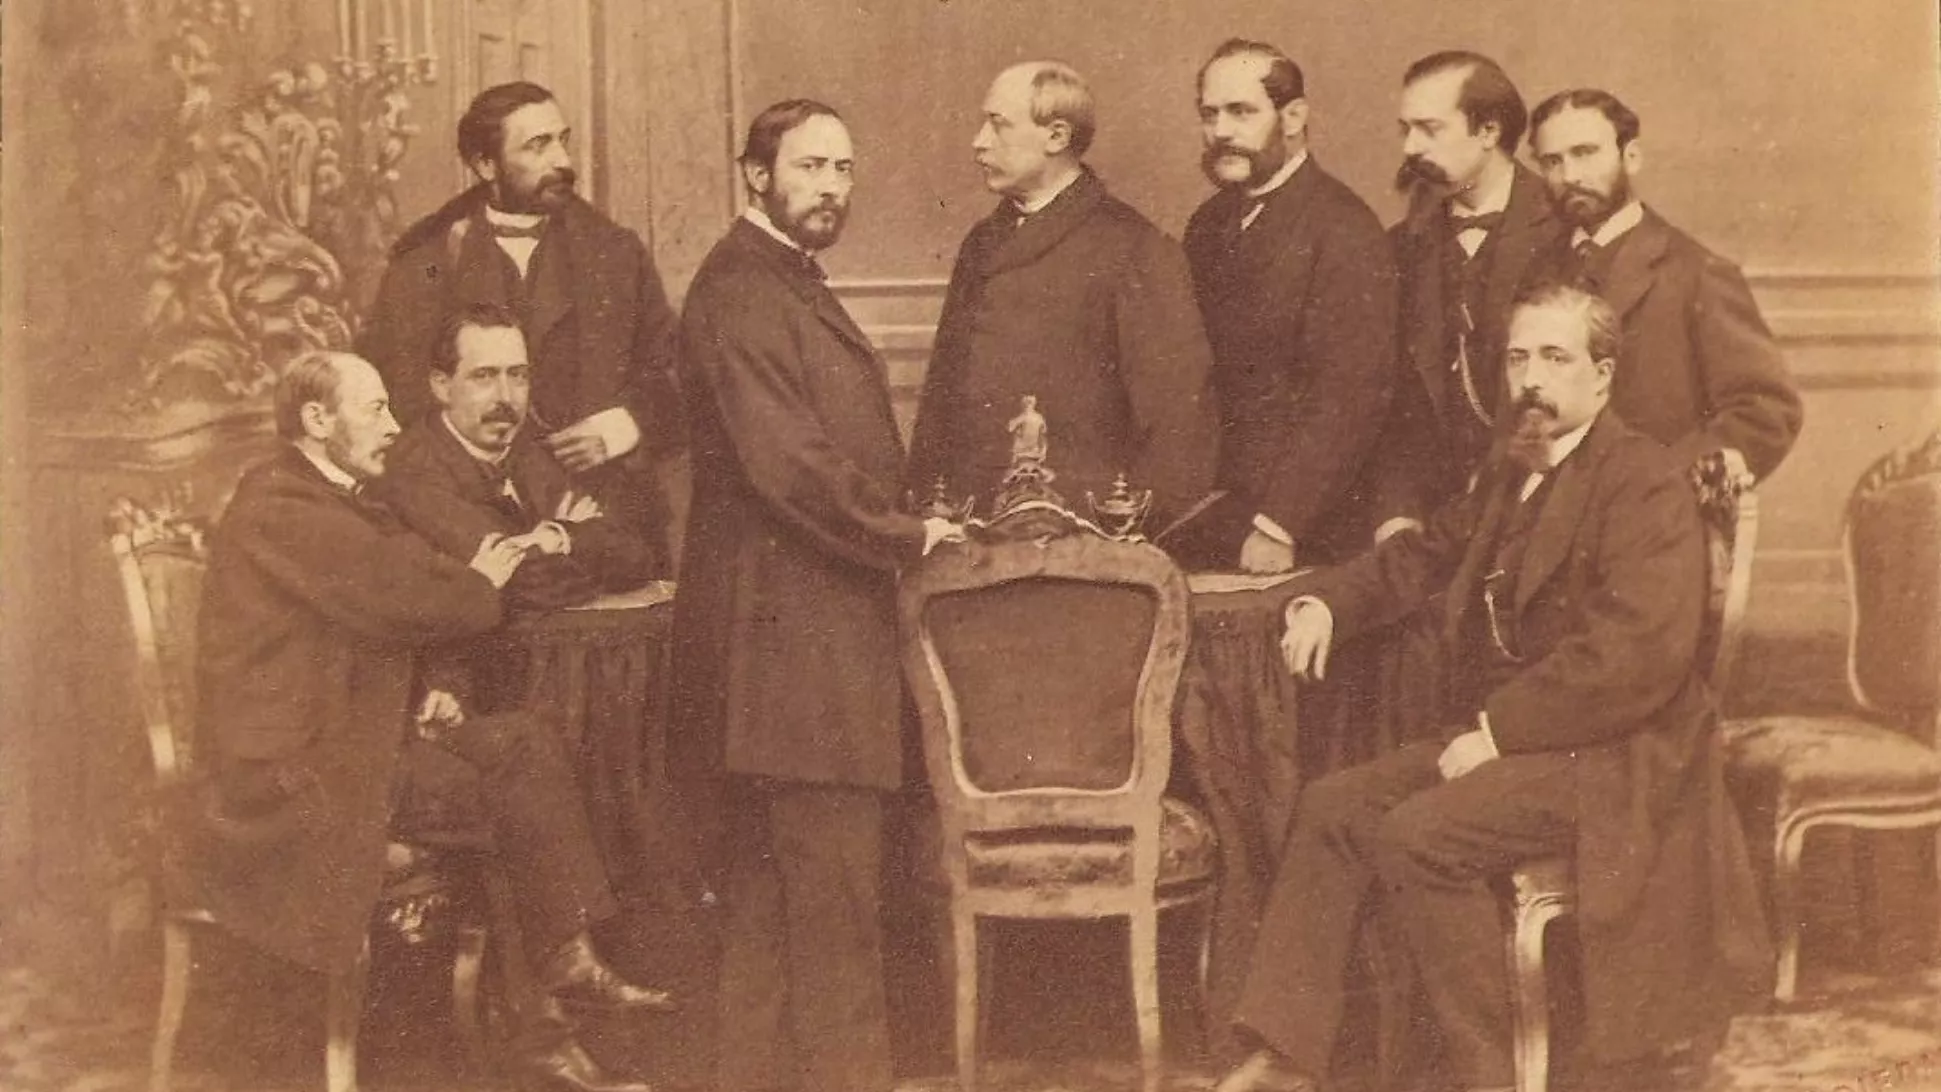 El govern provisional de 1869. Hi apareixen tresDesde izquierda: Laureano Figuerola, Manuel Ruiz Zorrilla, Práxedes Mateo Sagasta, Juan Prim